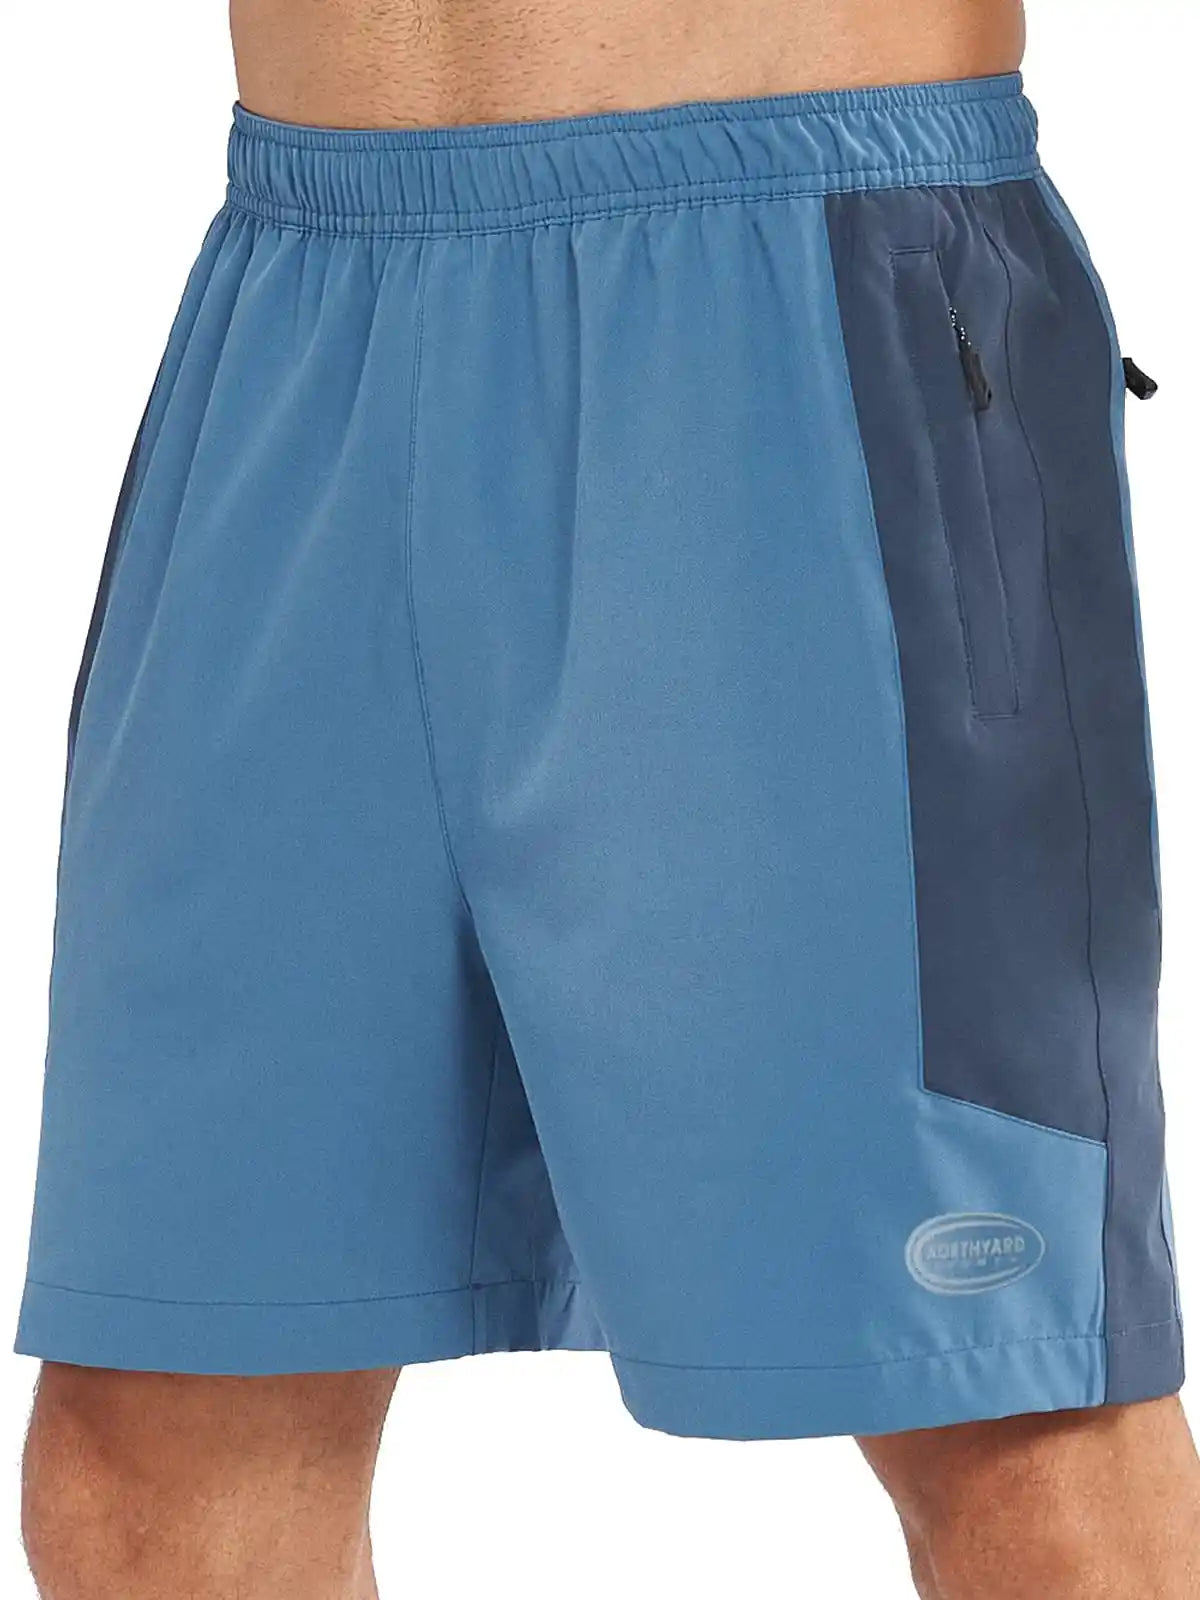 Men's 7" Athletic Shorts Zip Pockets Grey Blue